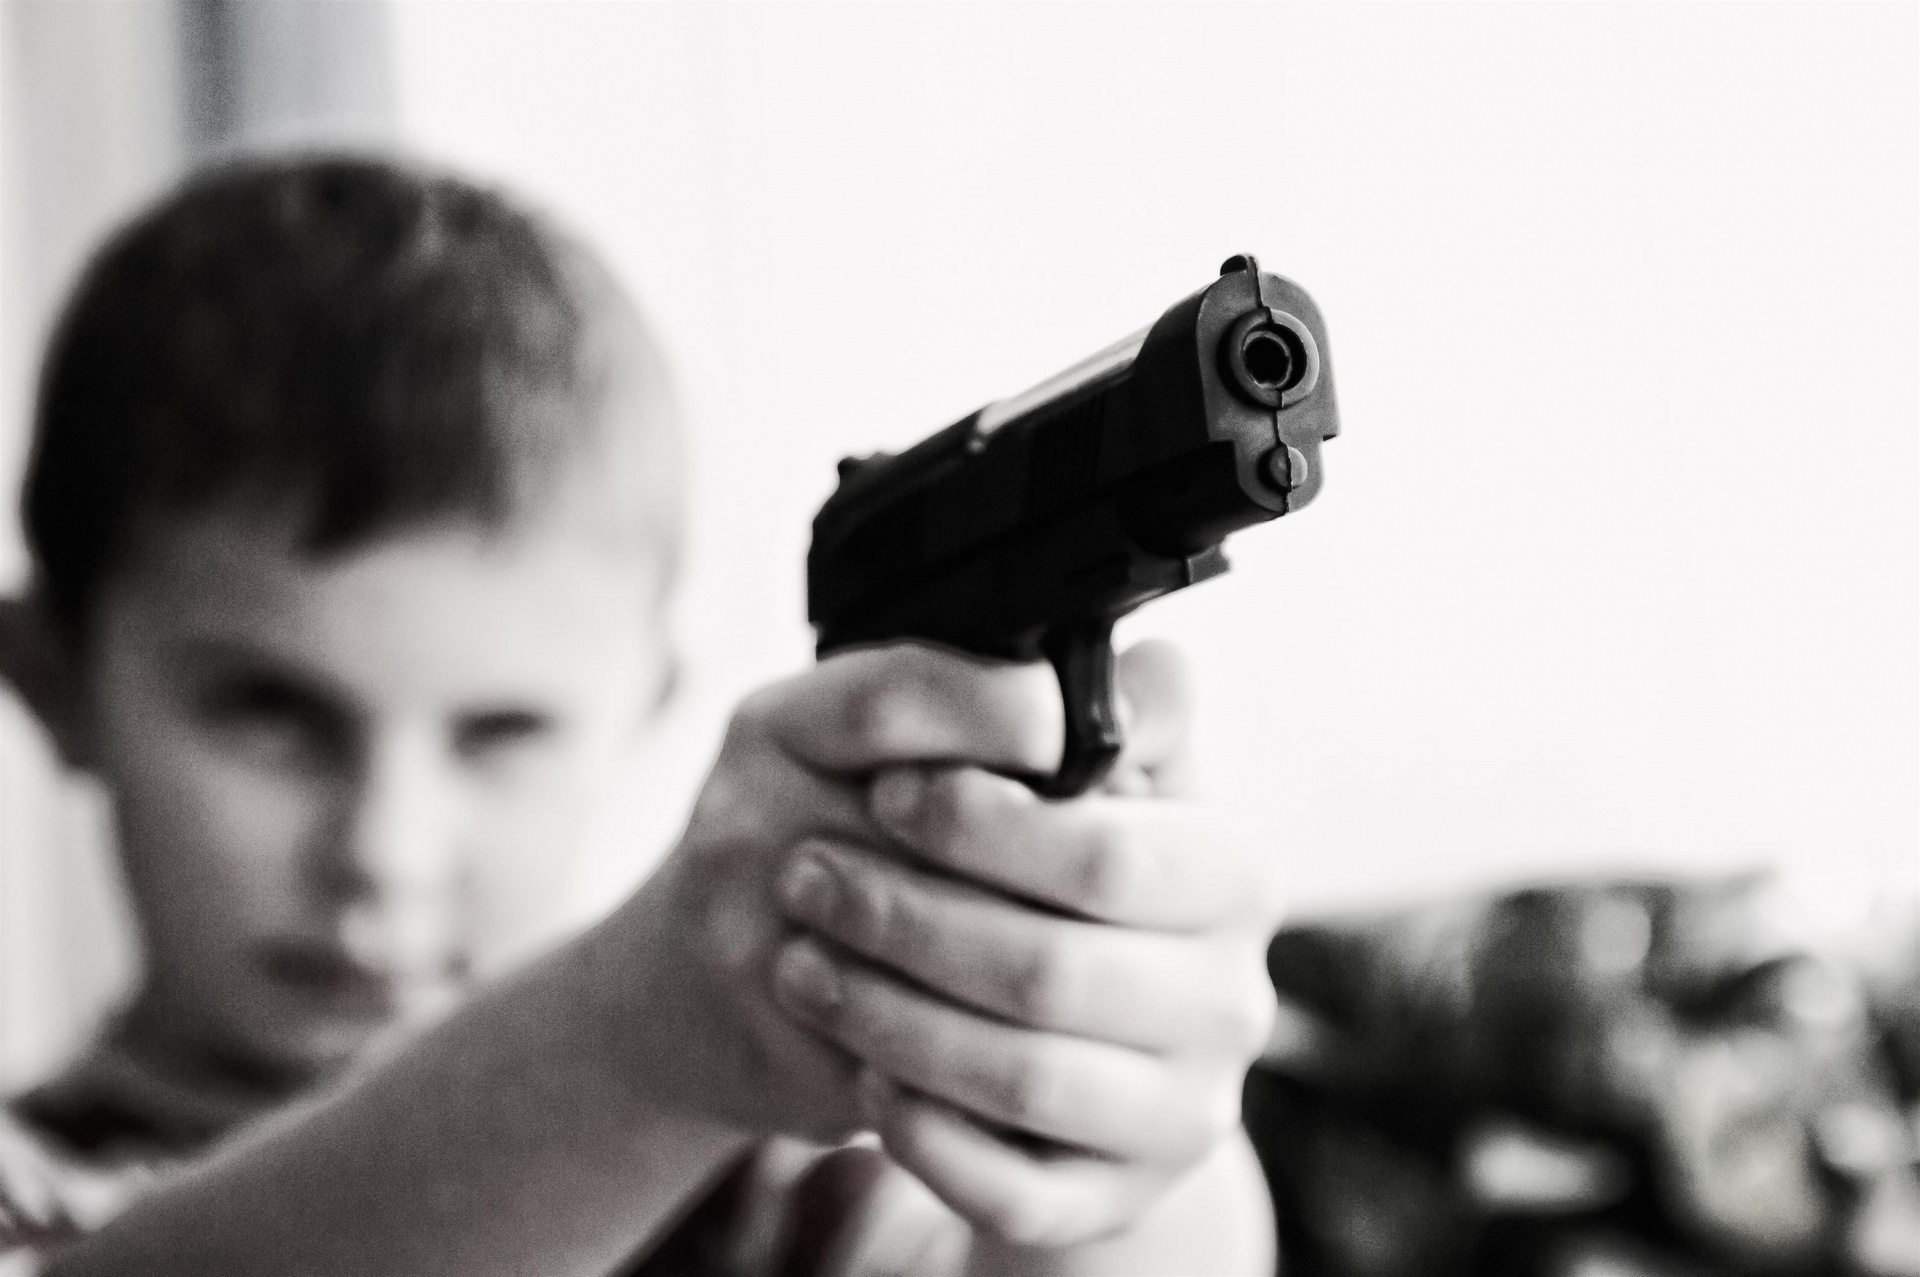 child wallpaper and gun